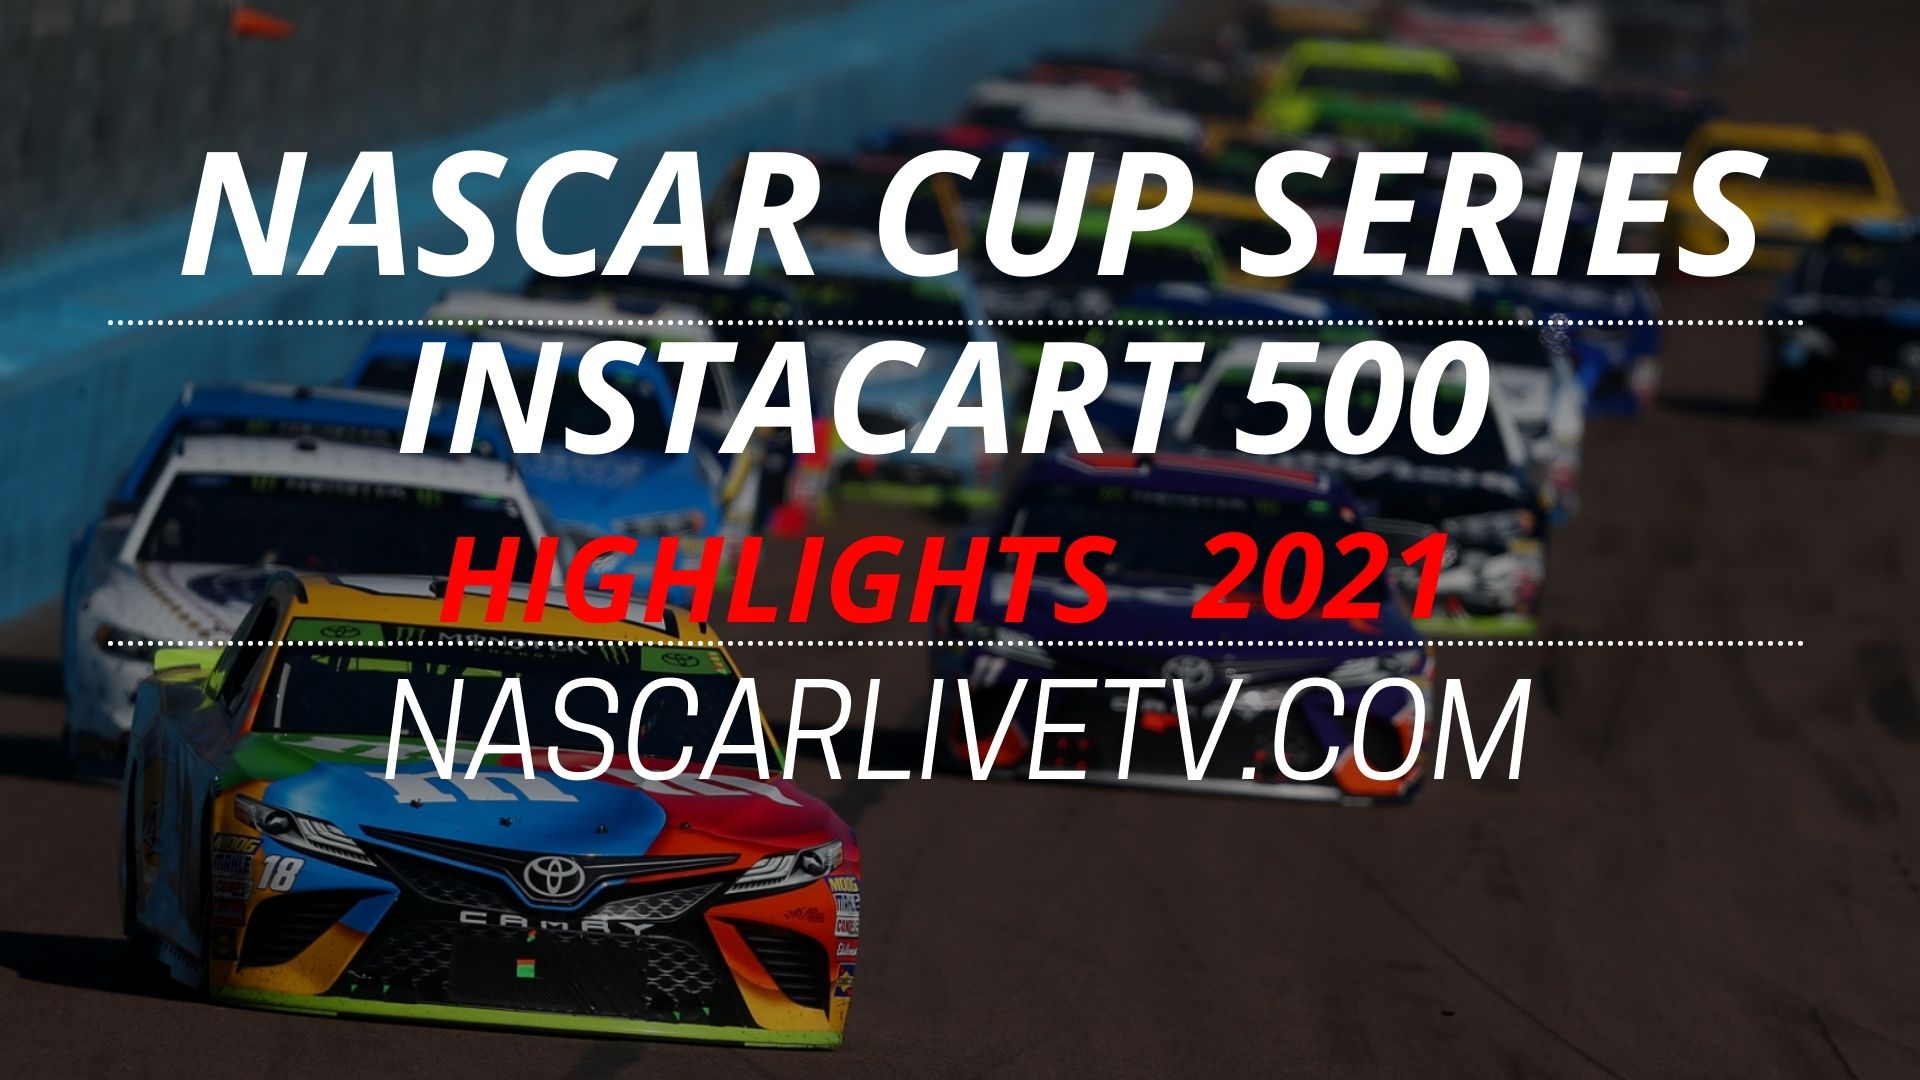 Instacart 500 Highlights NASCAR Cup Series 2021